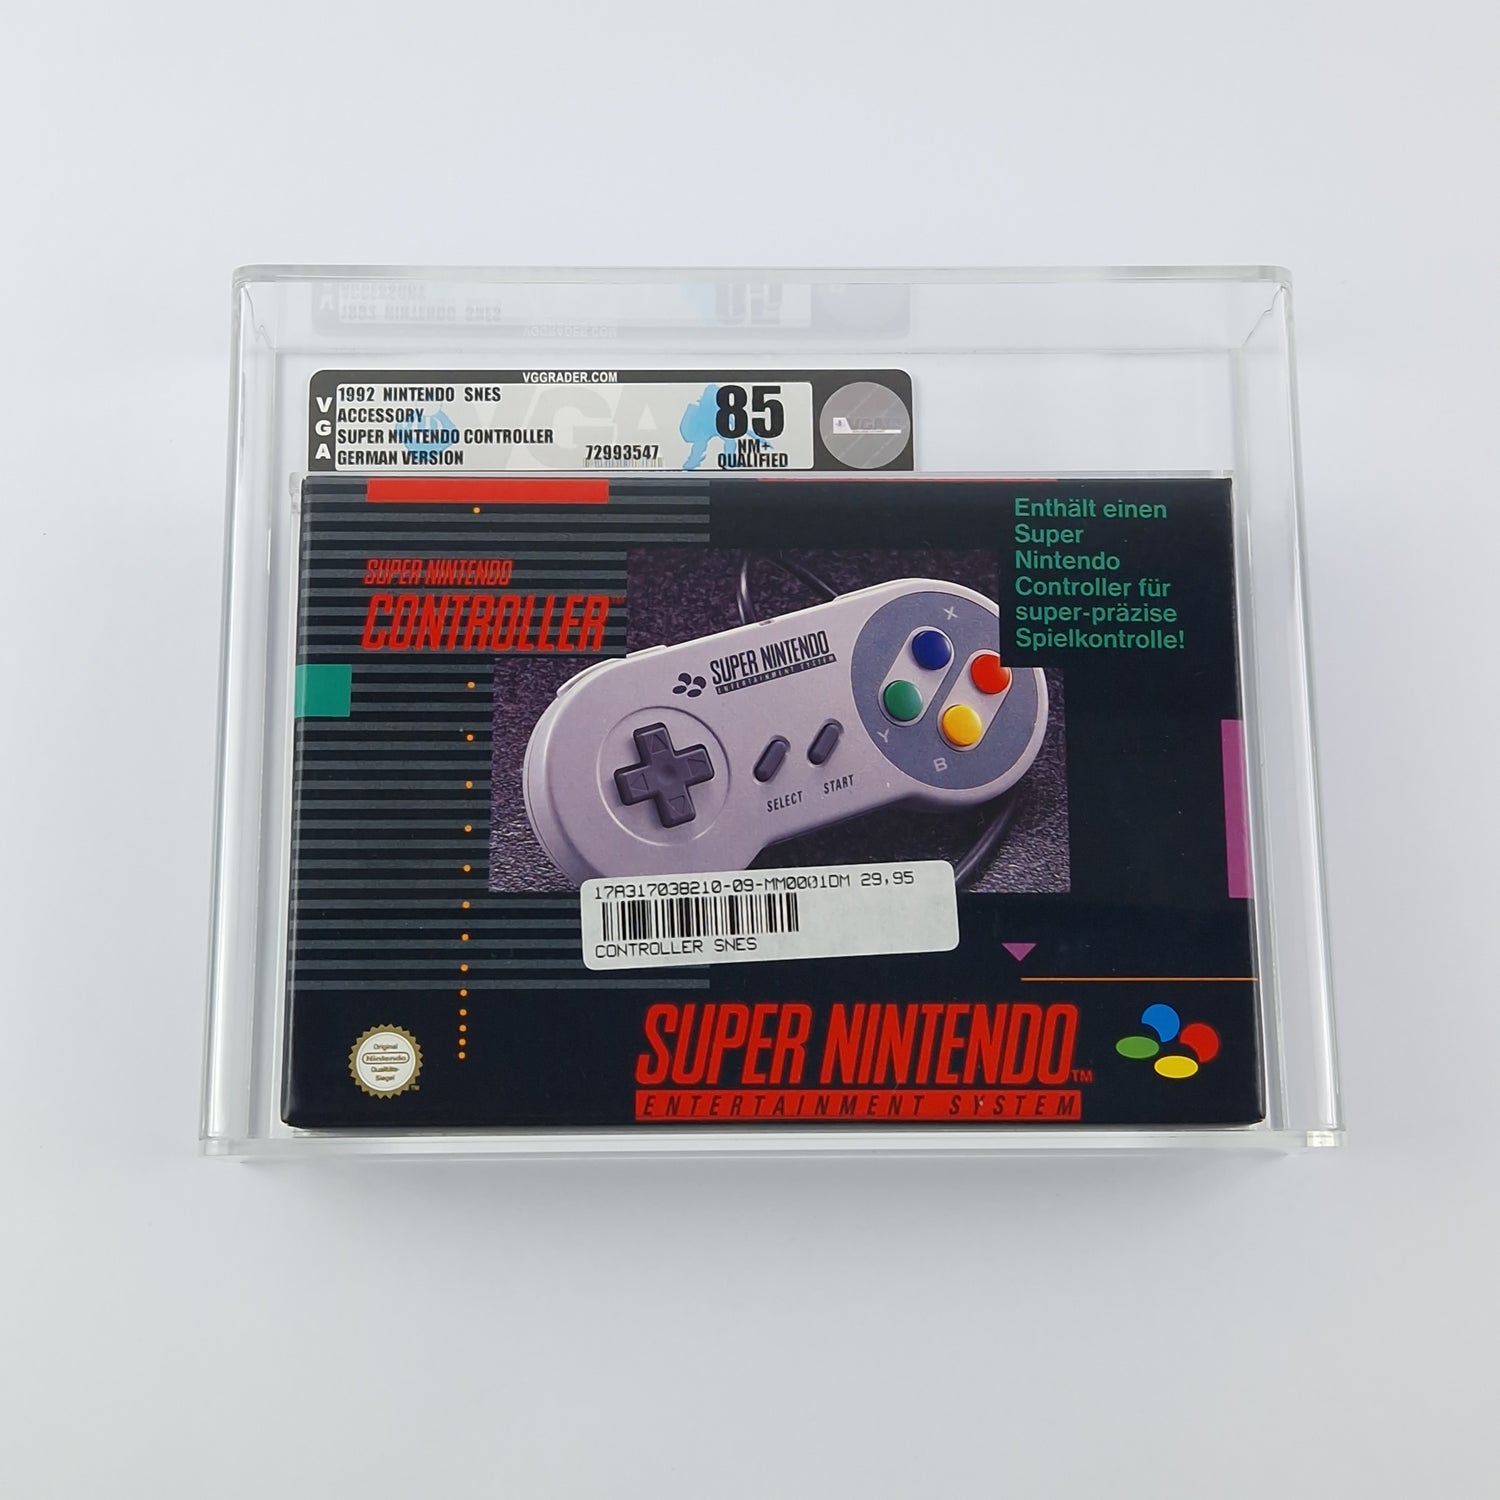 Super Nintendo Zubehör : Controller / Gamepad - OVP NEU NEW - VGA 85 Qualified